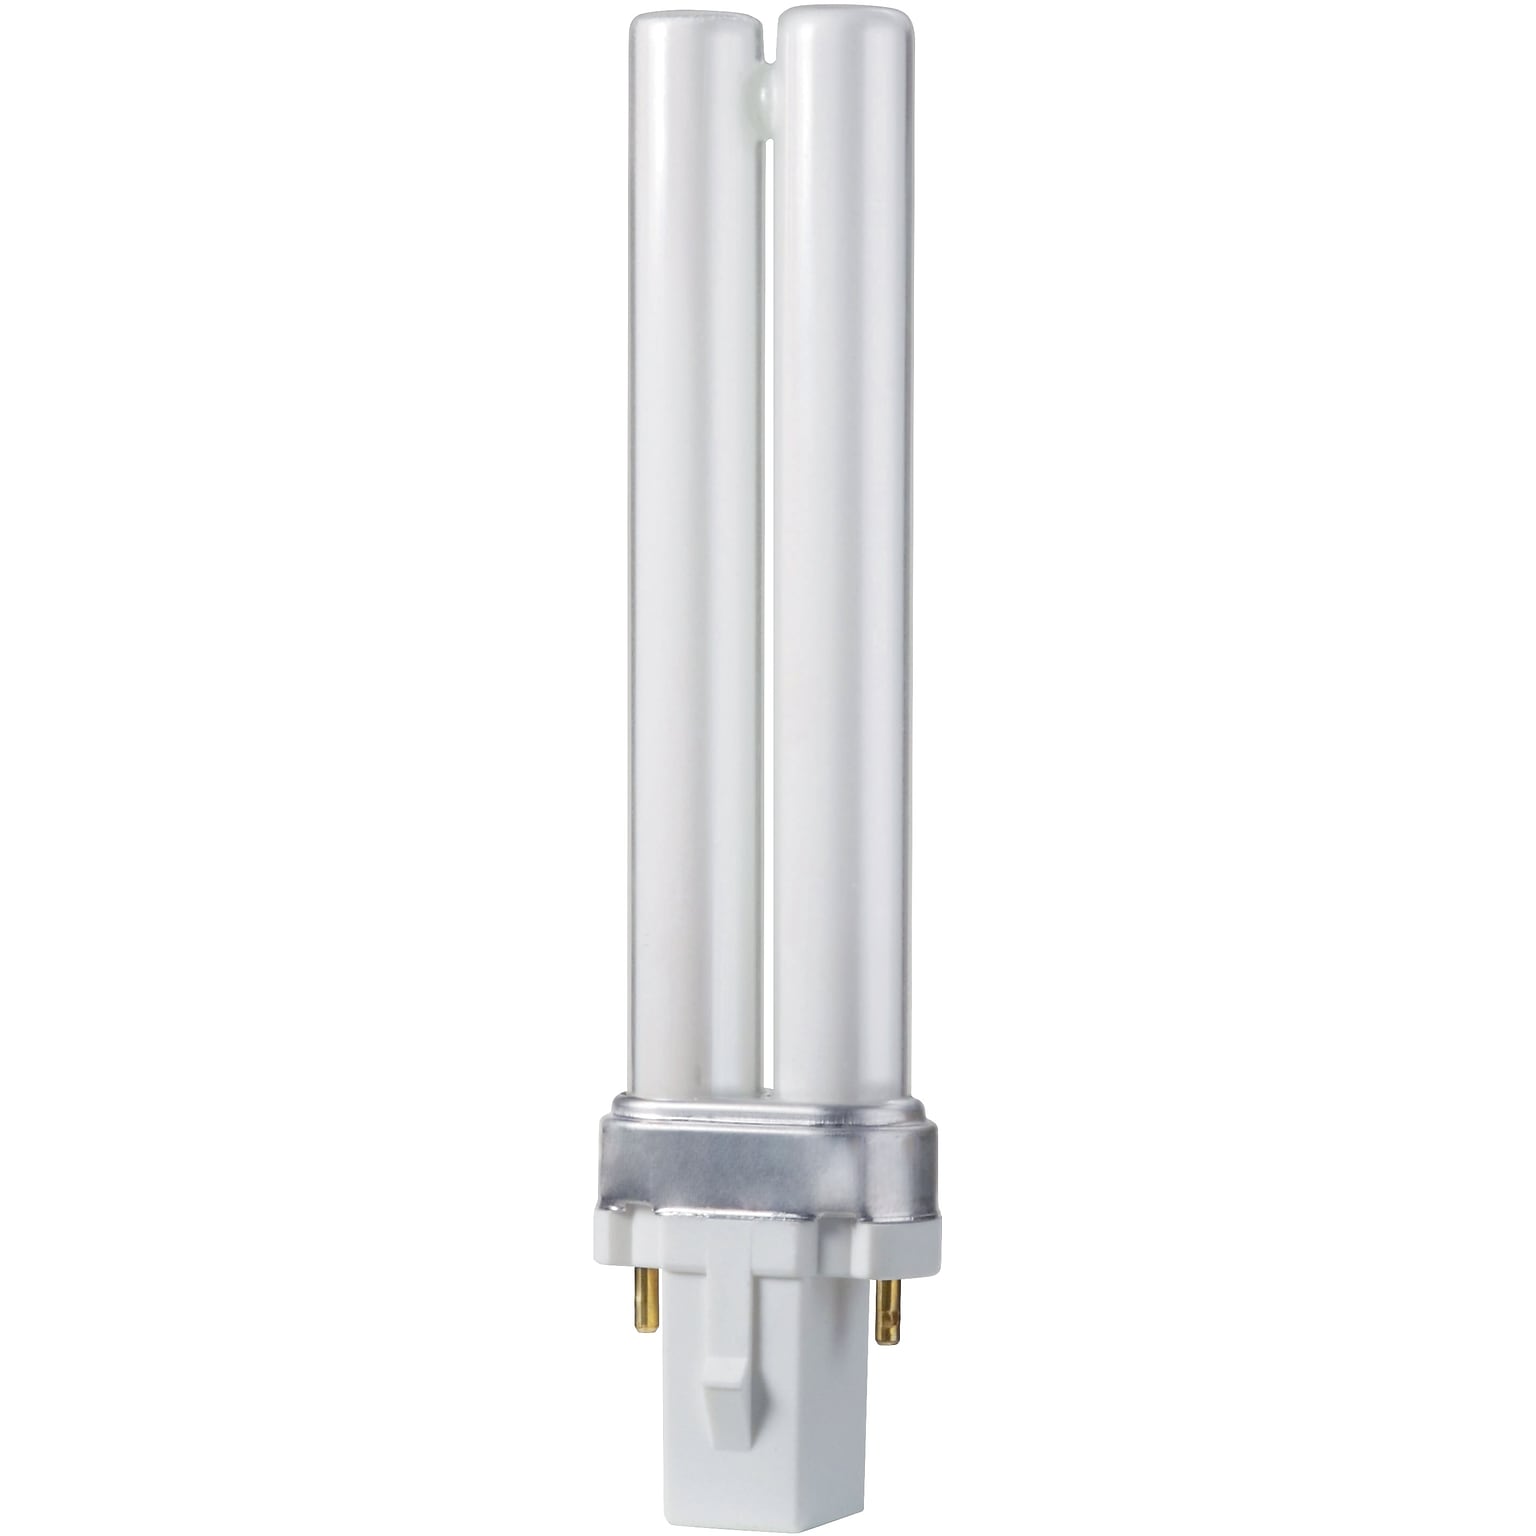 Philips Compact Fluorescent PL-S Lamp, 7 Watts, 2-Pin, Warm White, 10PK